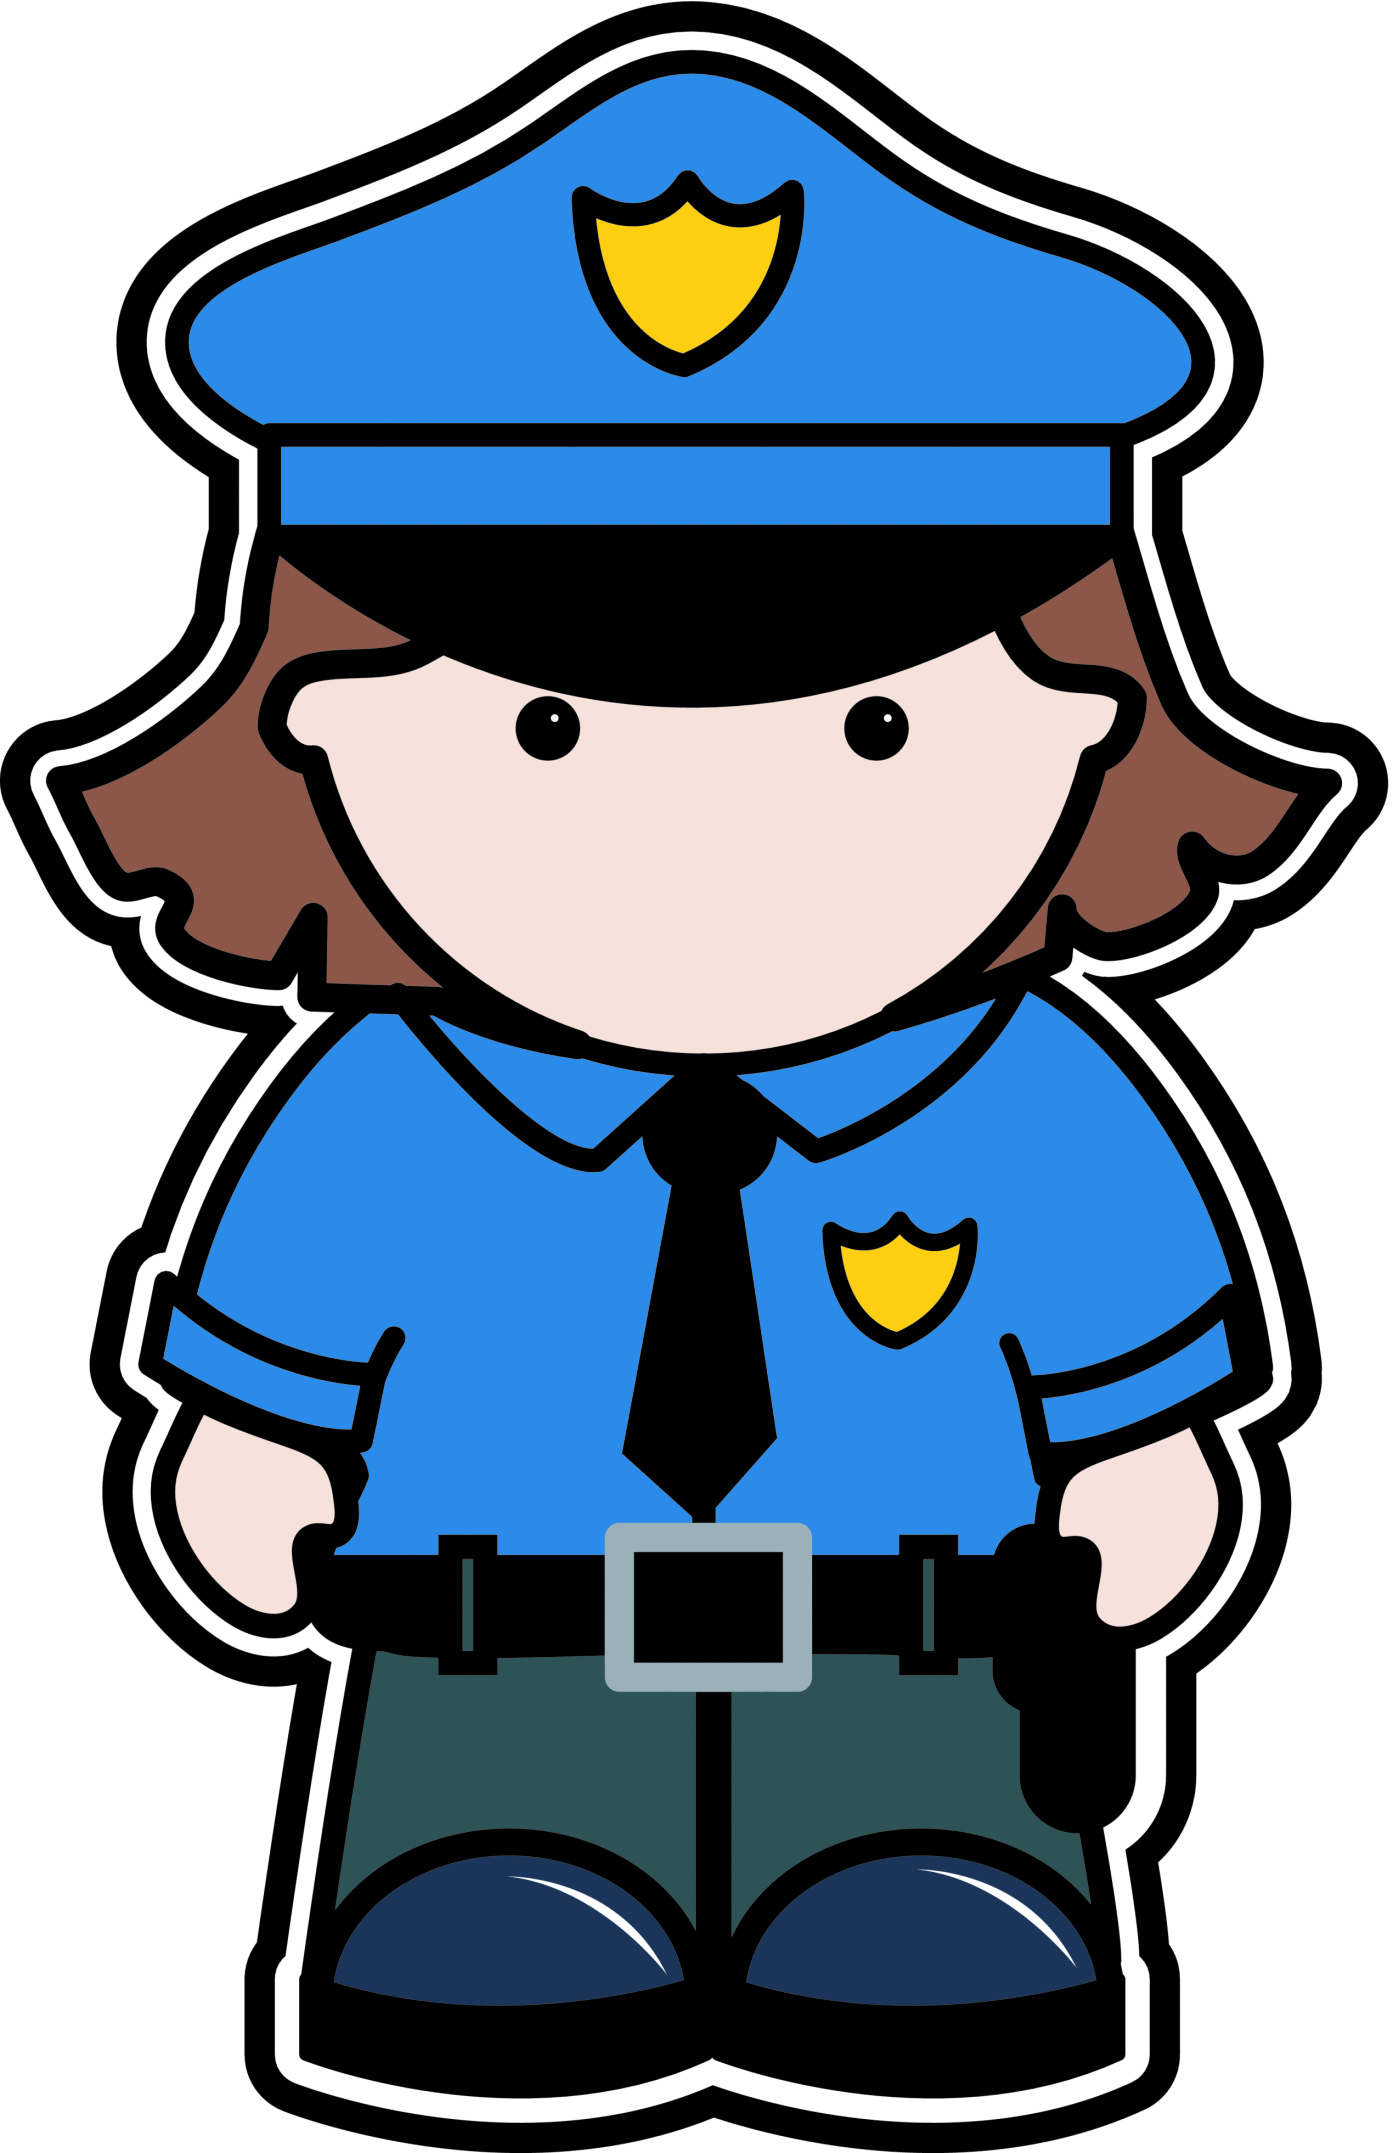 Police Clip Art Law Enforcement - Free Clipart Images